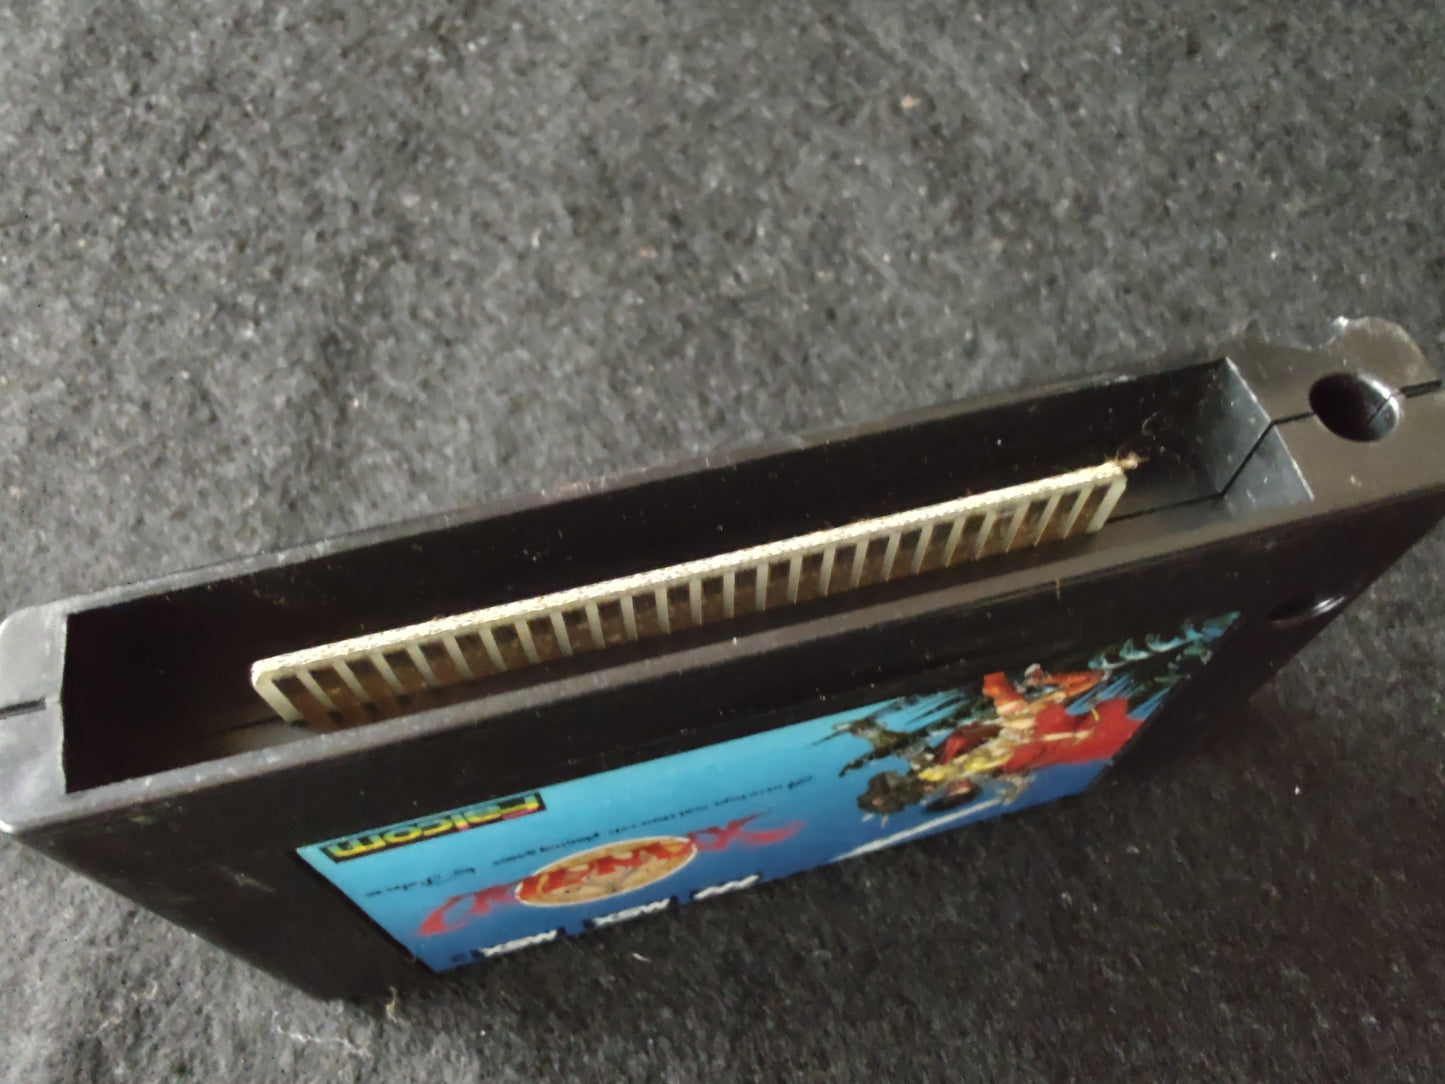 Xanadu Nihon Falcom MSX MSX2 Game Cartridge, Manual, Box set tested-f0113-